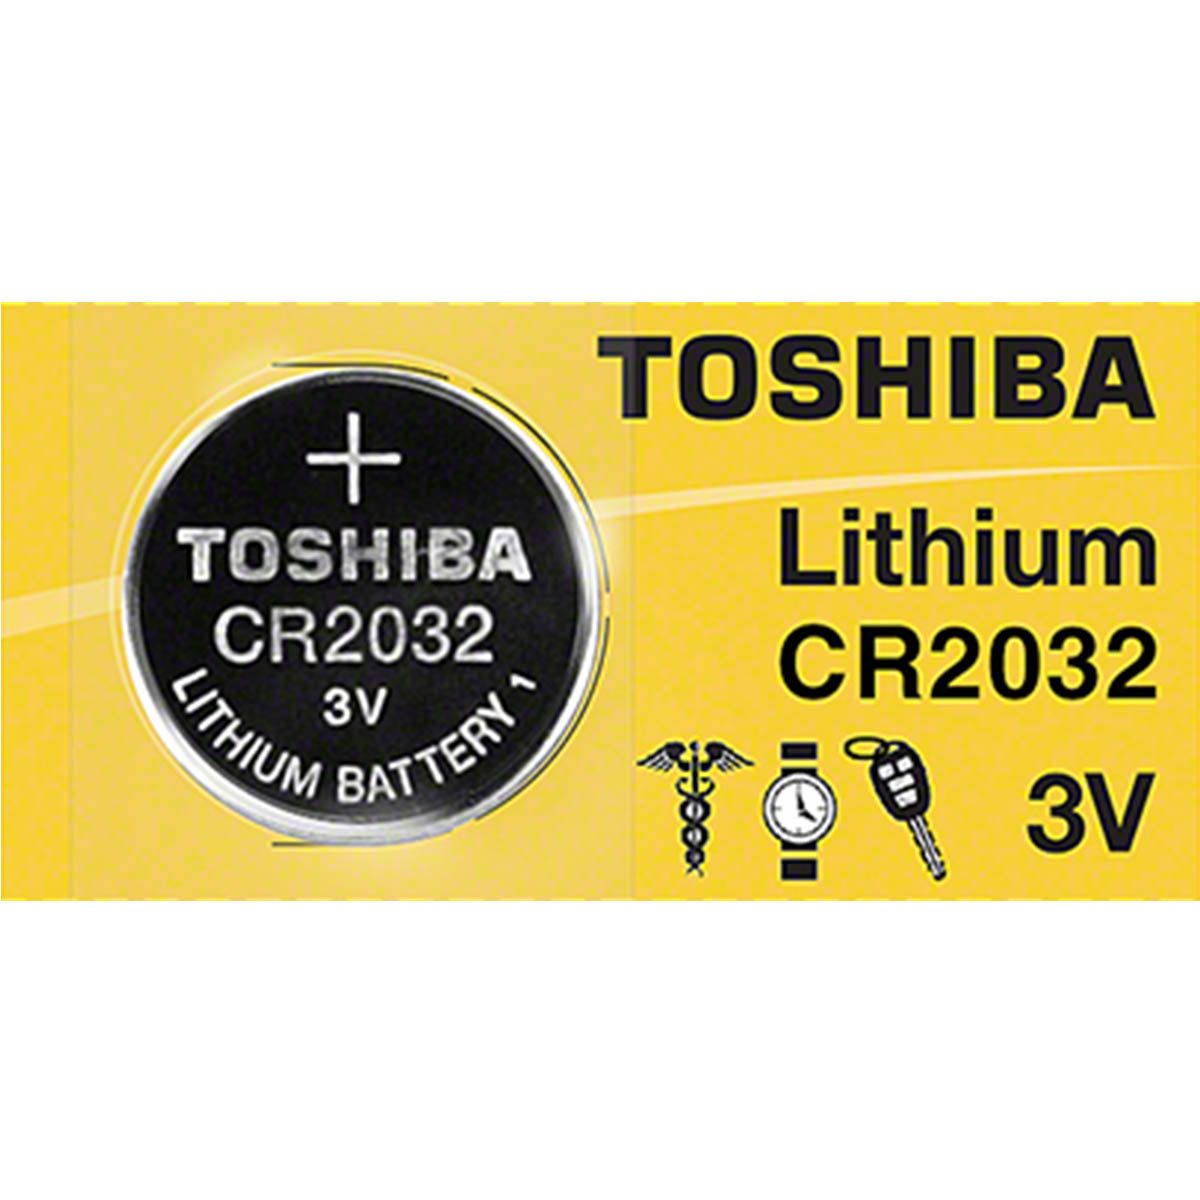 Leeuw steno Baan Toshiba CR2032 Lithium Coin Cell Battery 3v, Tear Strip